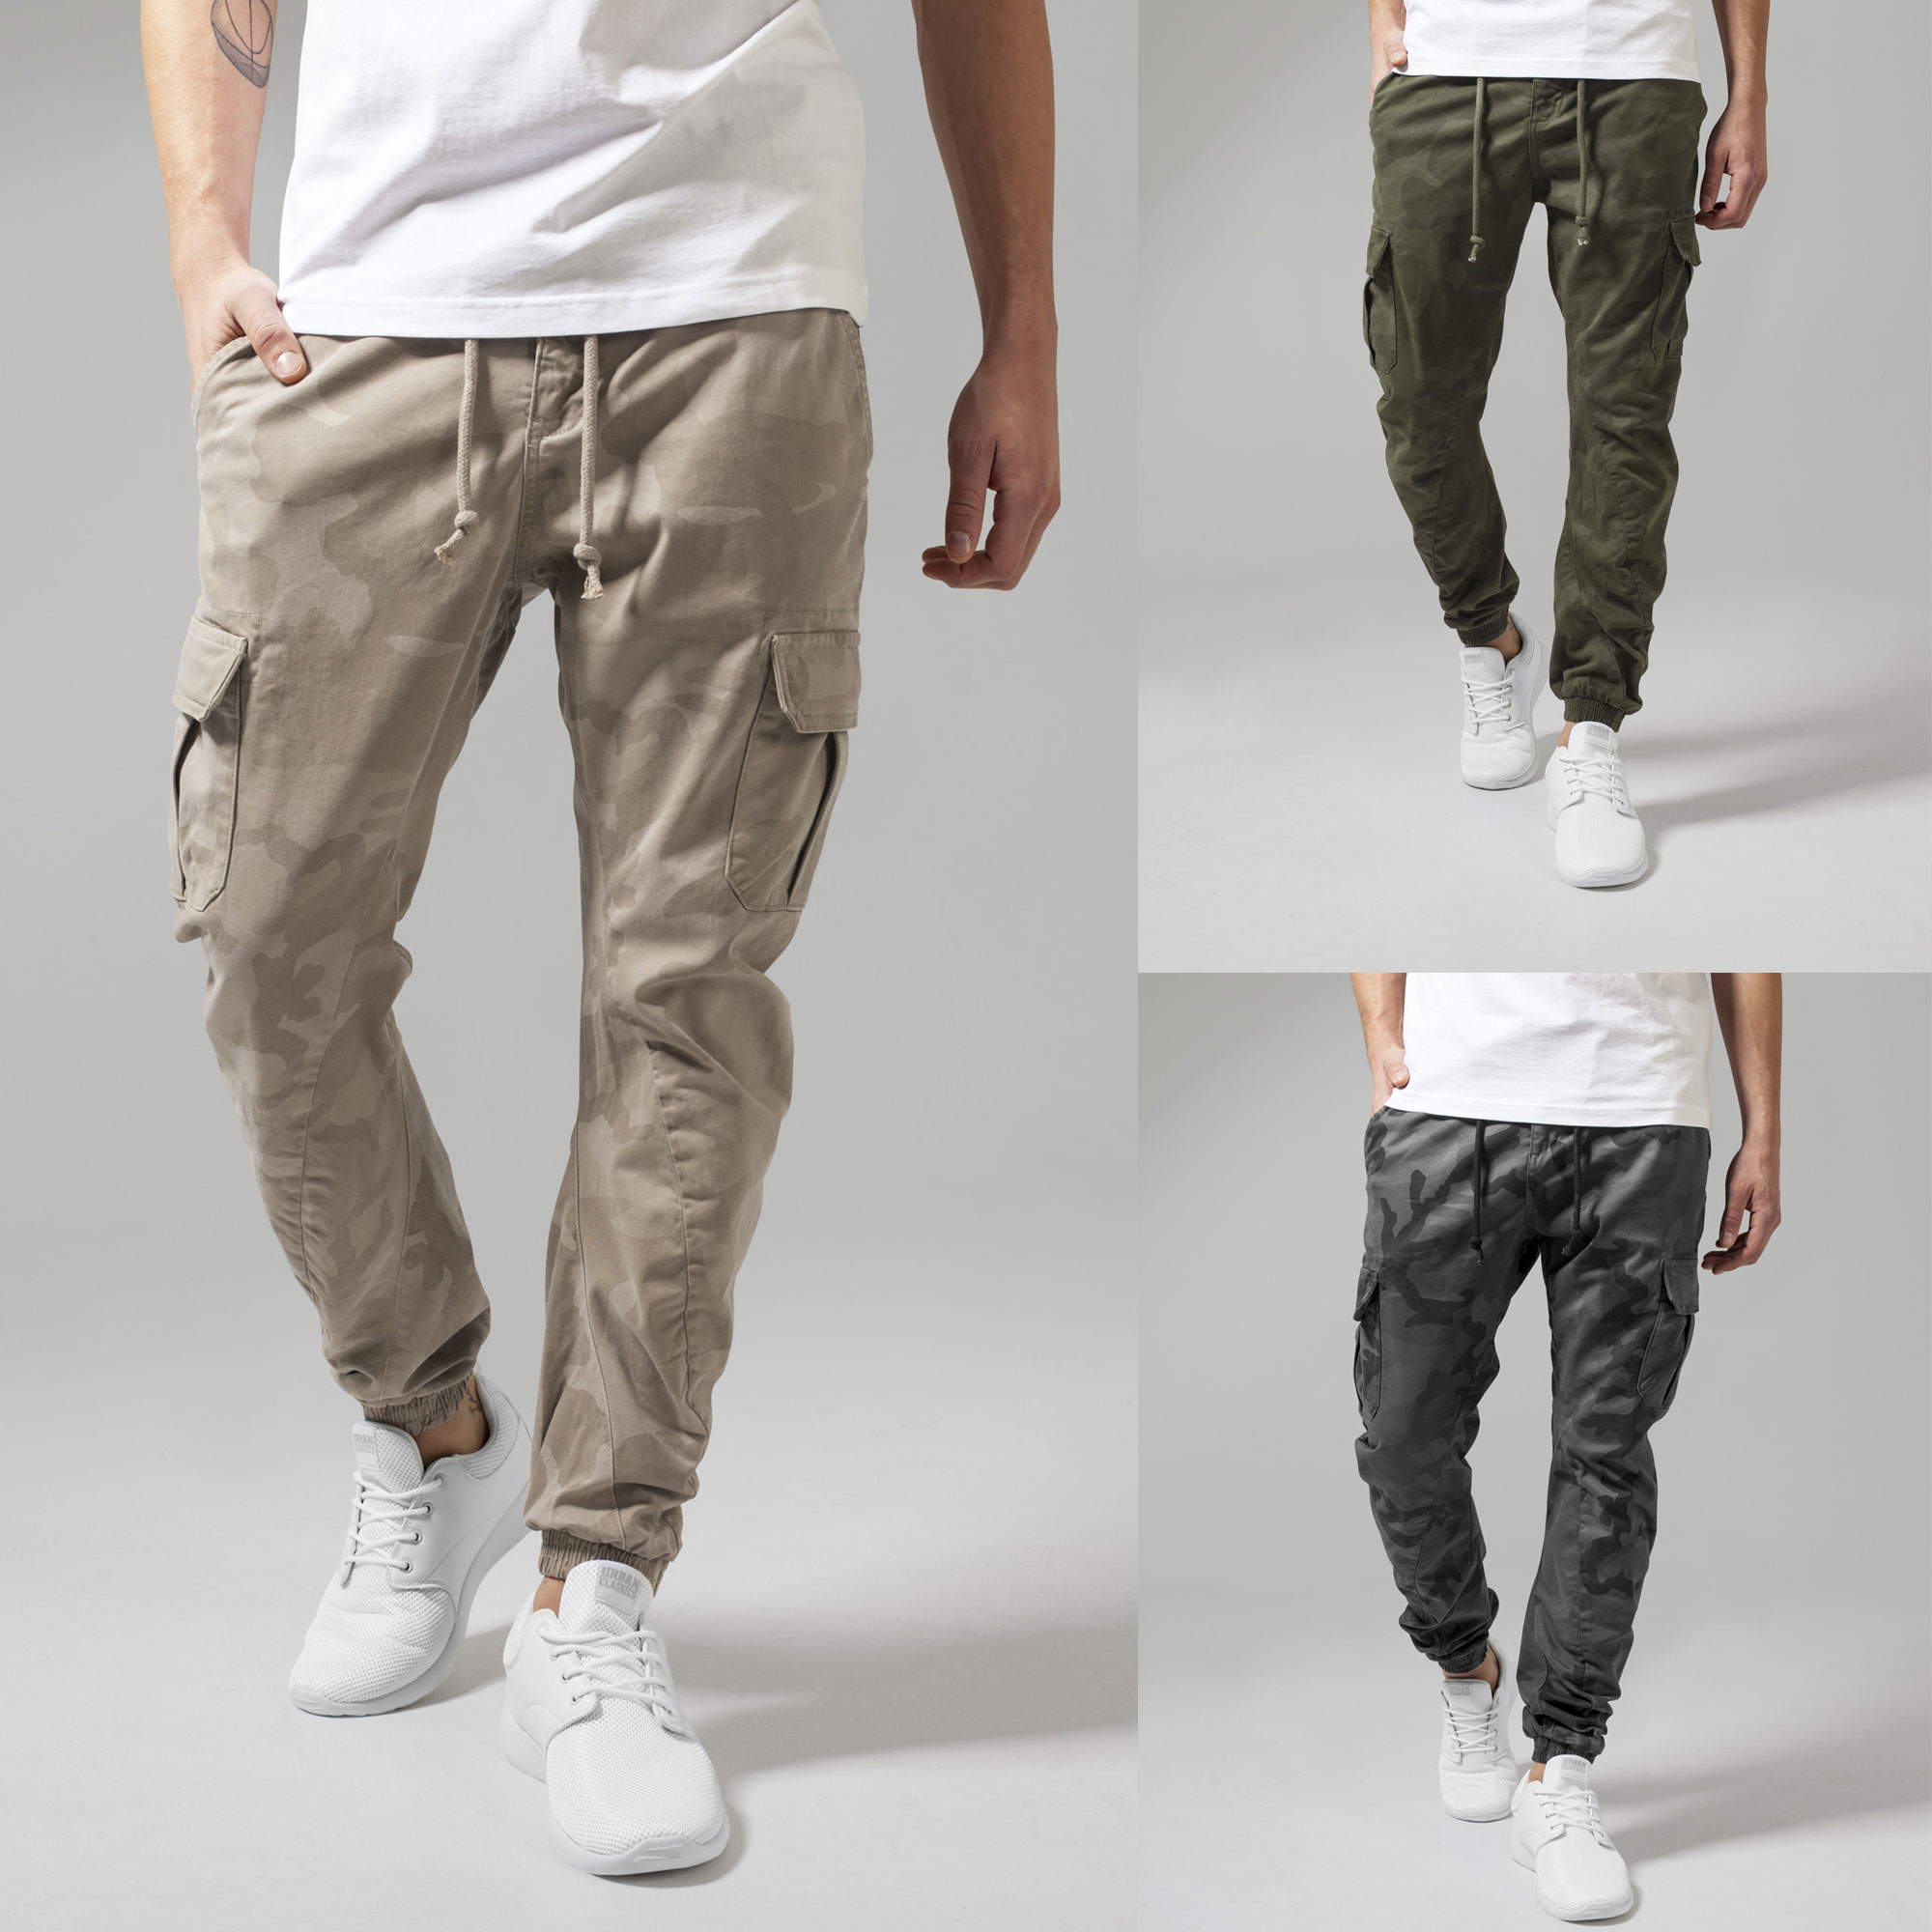 Pants Cargo Classics | Mens Urban Tube Sweatpant Jeans eBay Chino Camo Pants Jogging